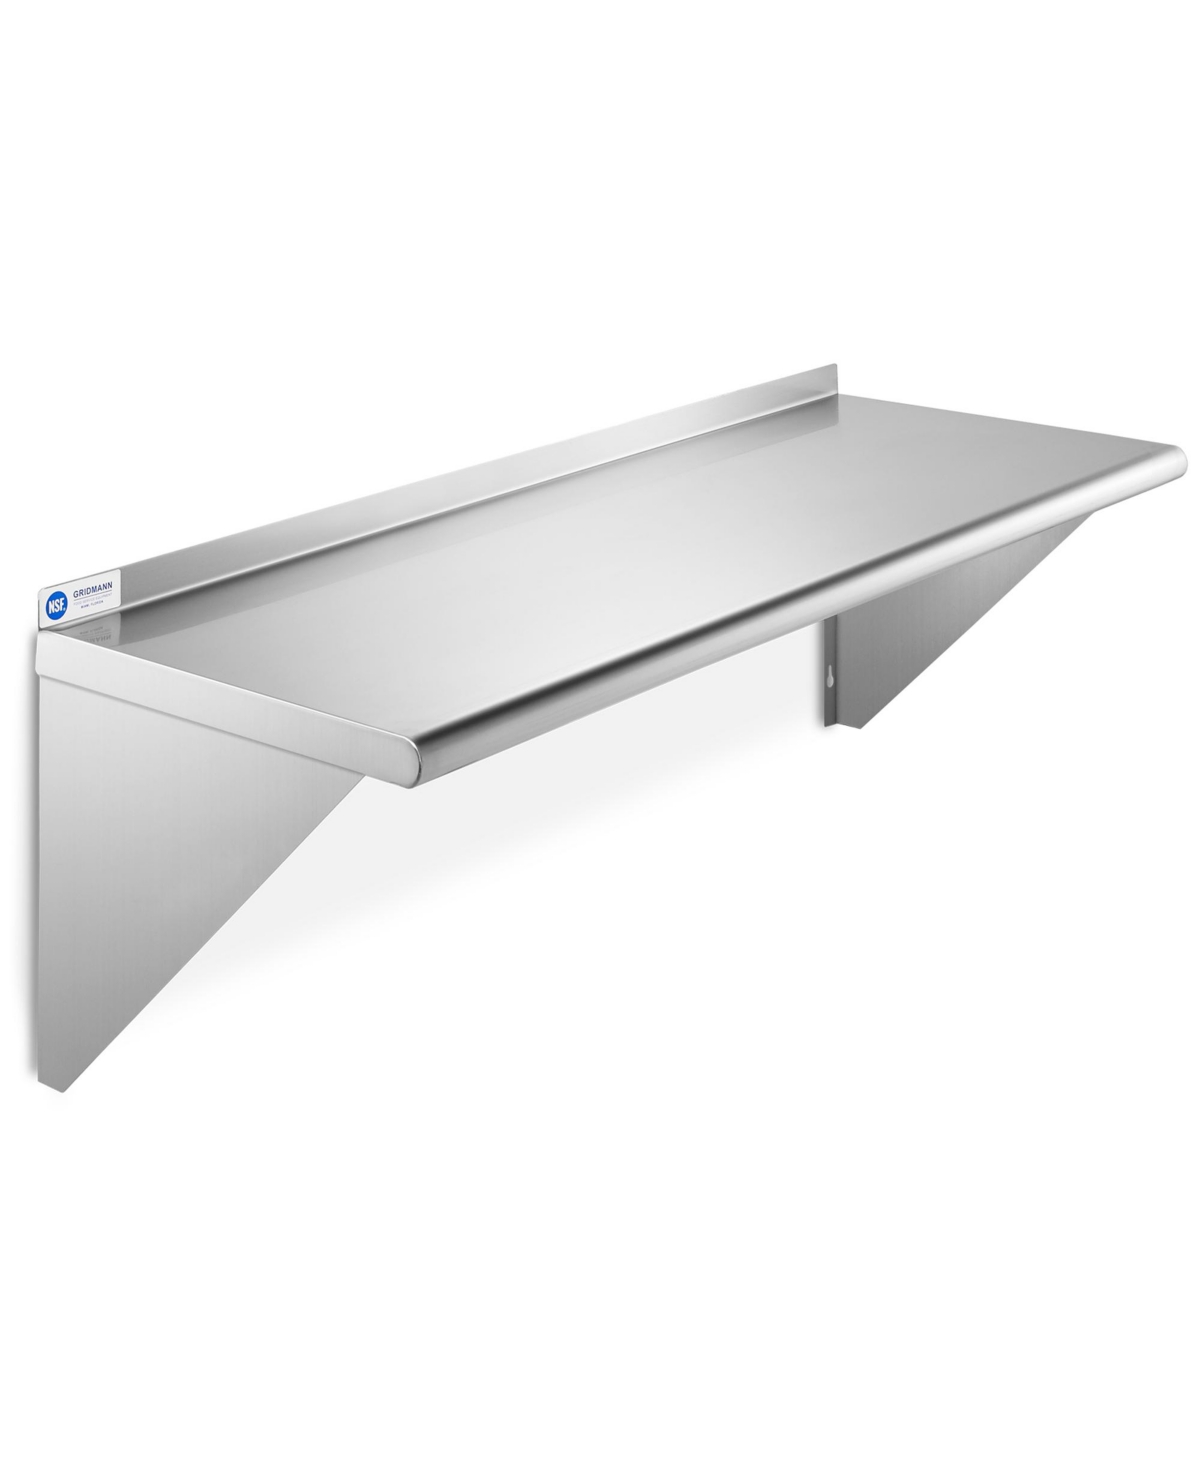 12" x 36" Nsf Stainless Steel Kitchen Wall Mount Shelf w/ Backsplash - Silver